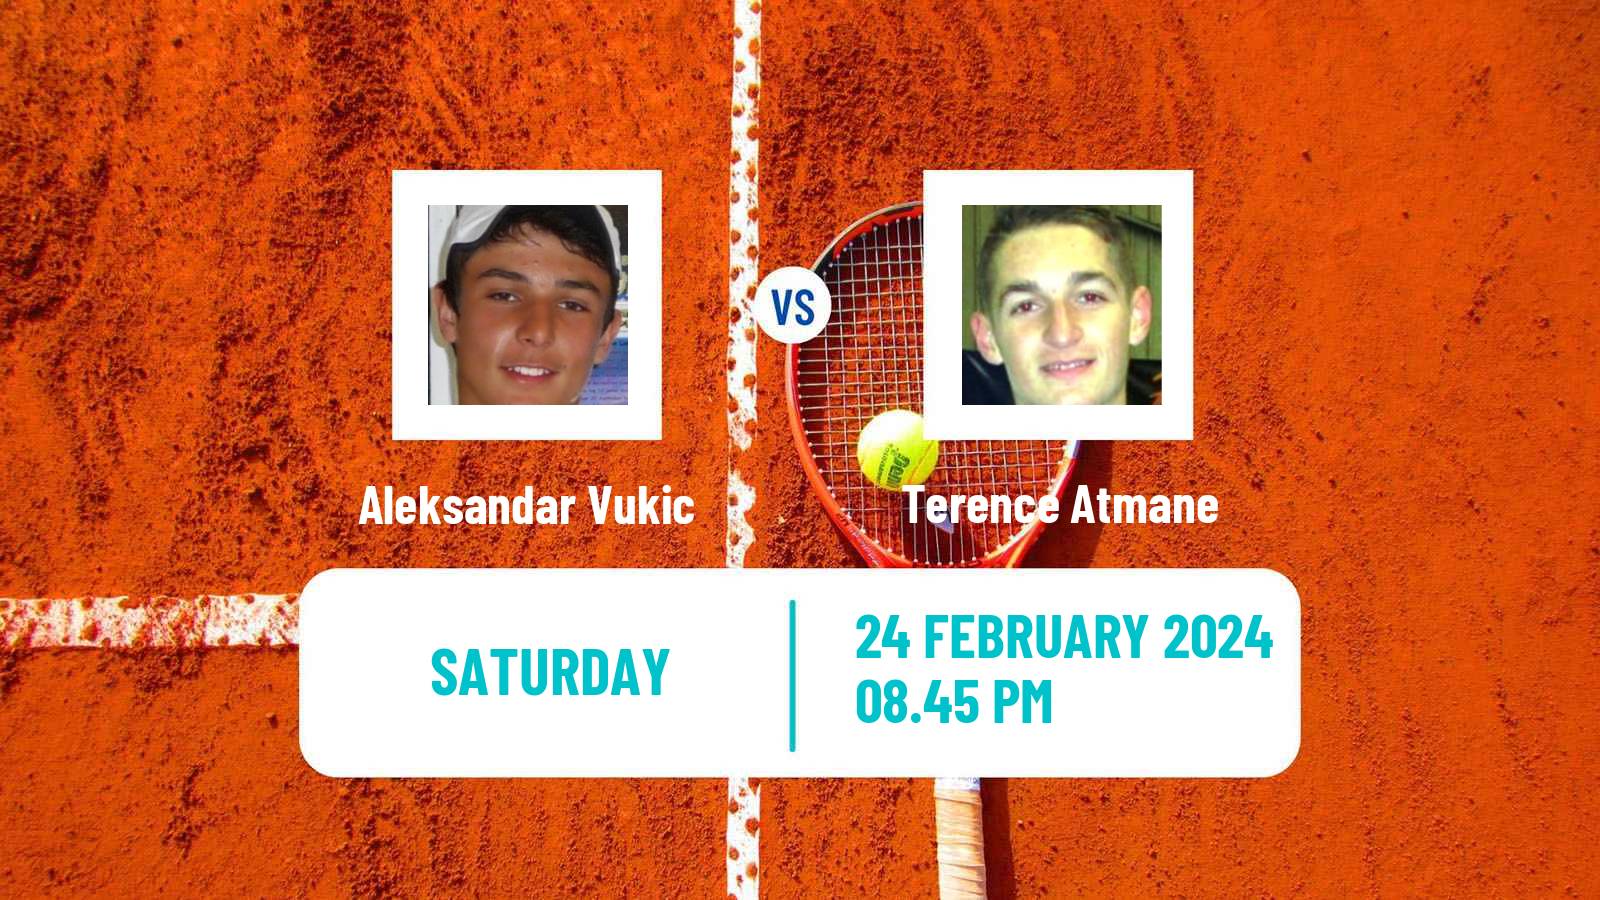 Tennis ATP Acapulco Aleksandar Vukic - Terence Atmane